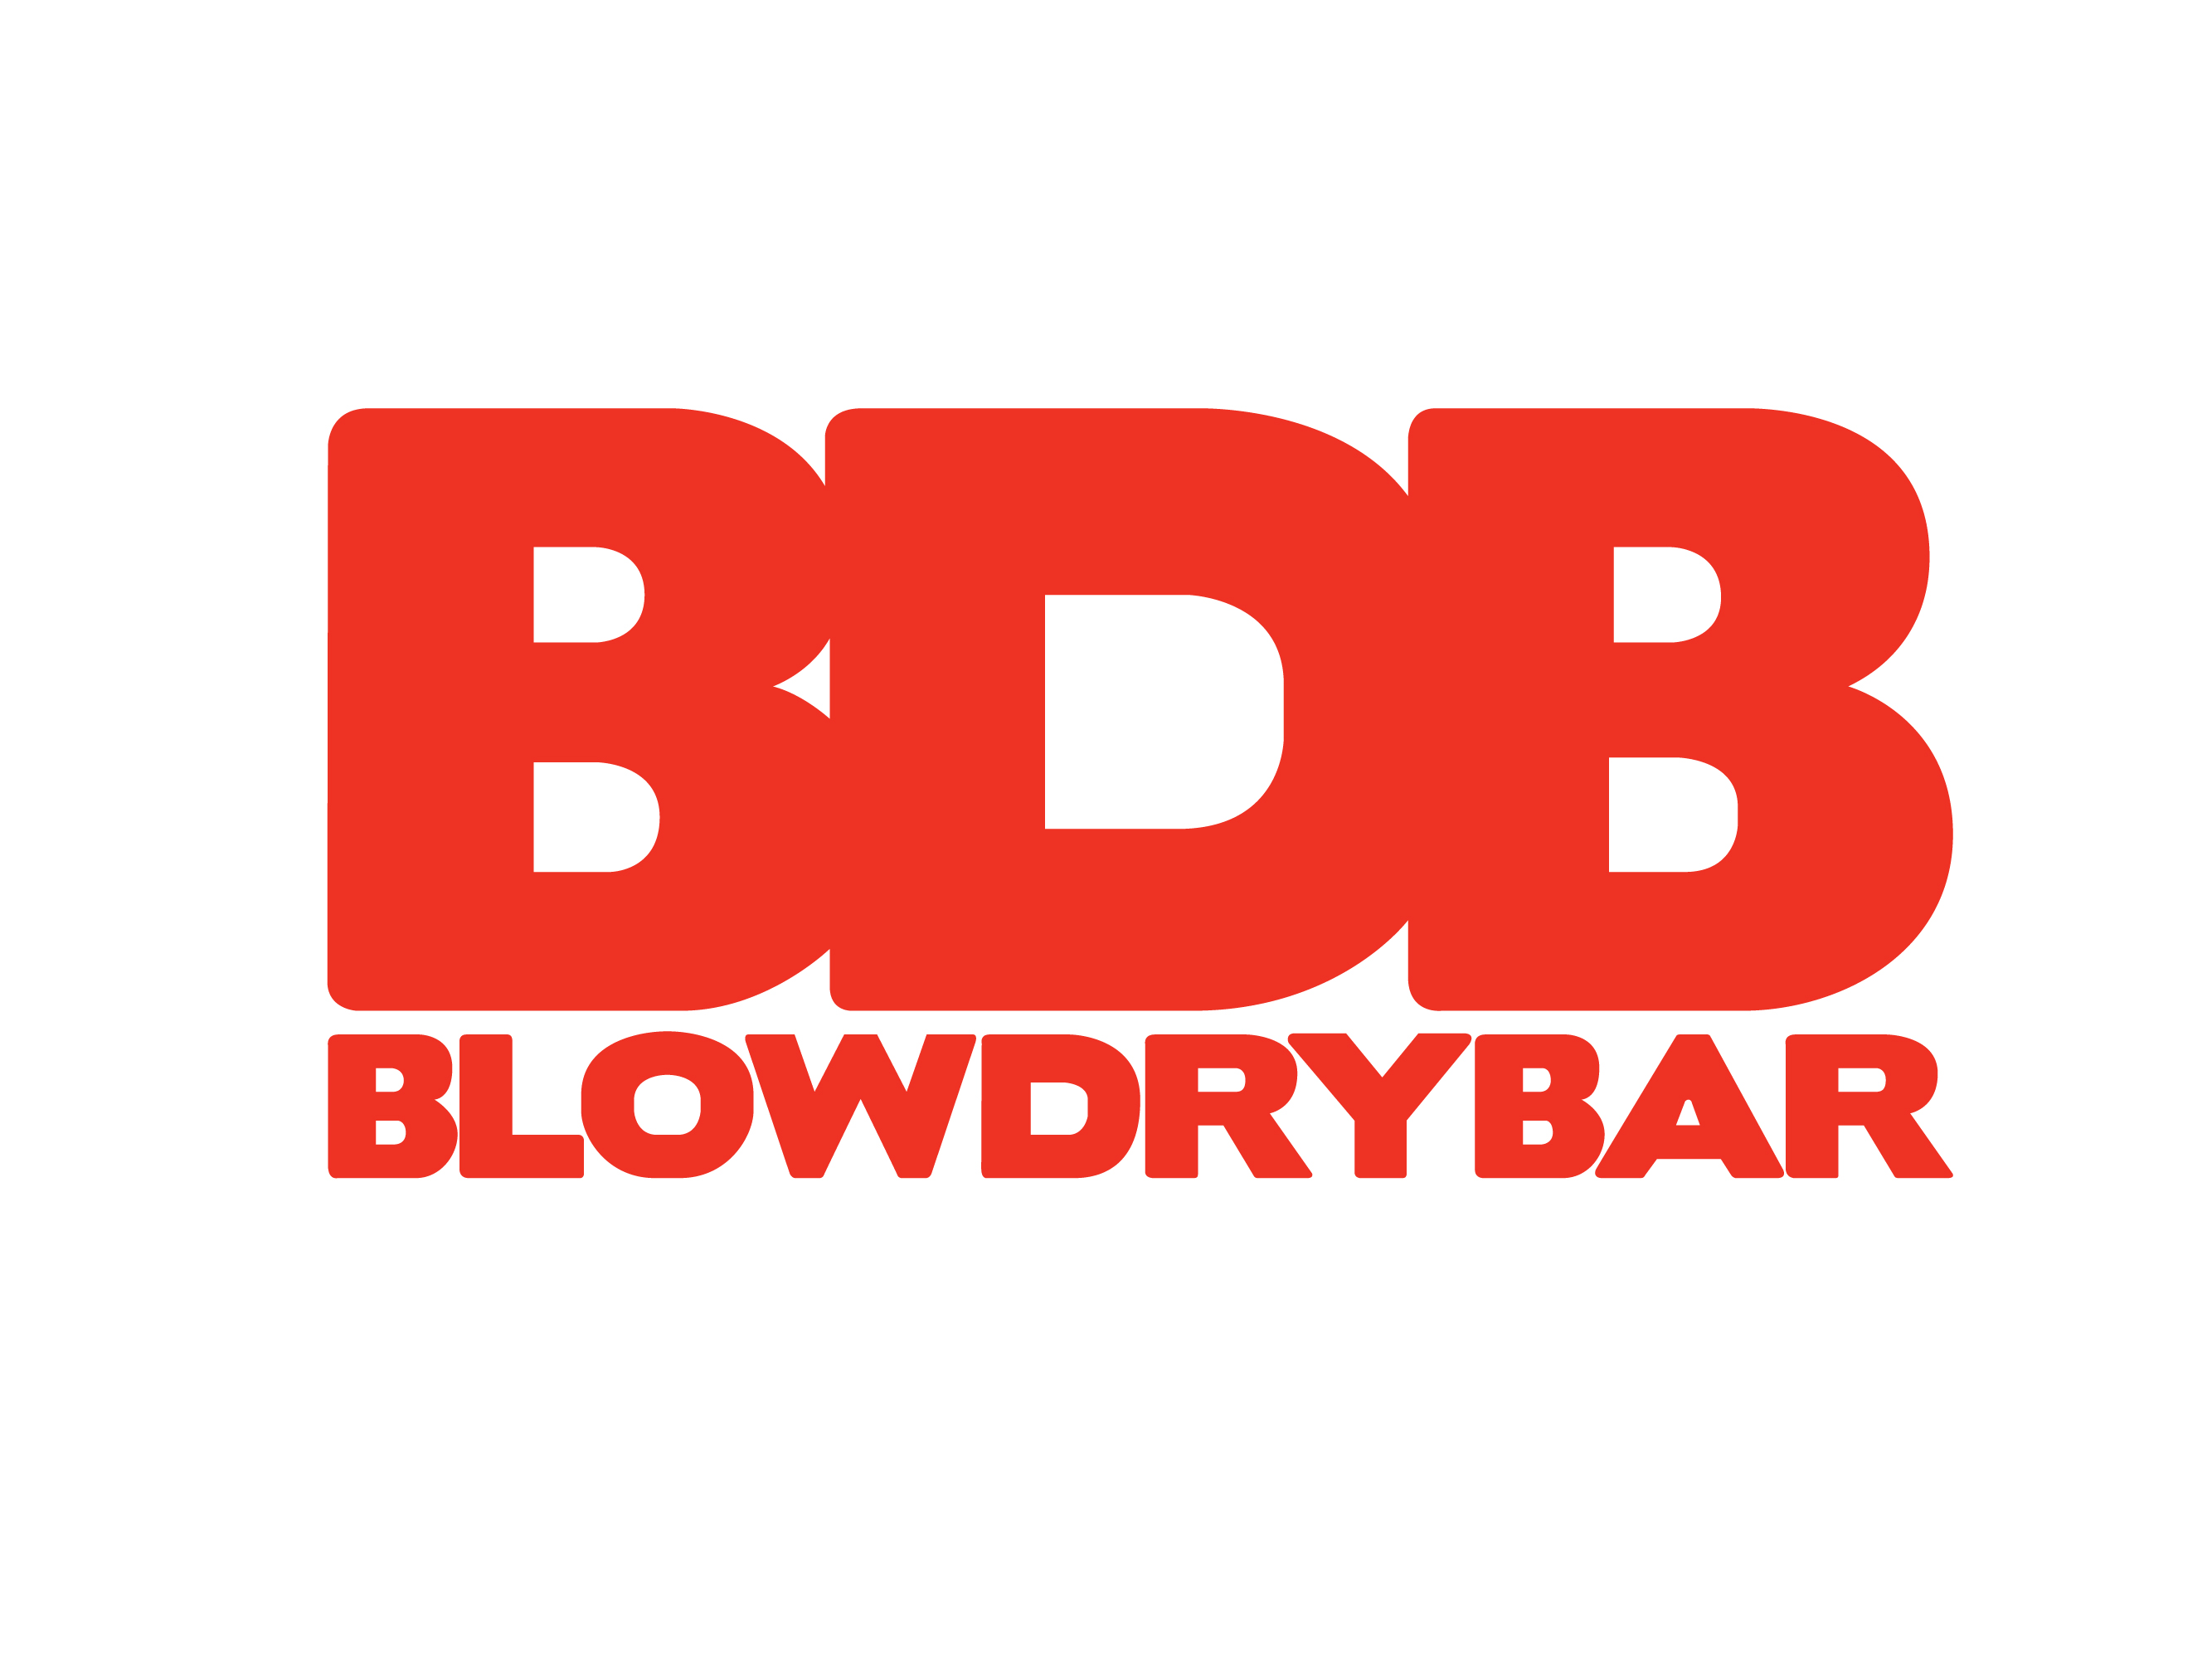 Blow Dry Bar logo